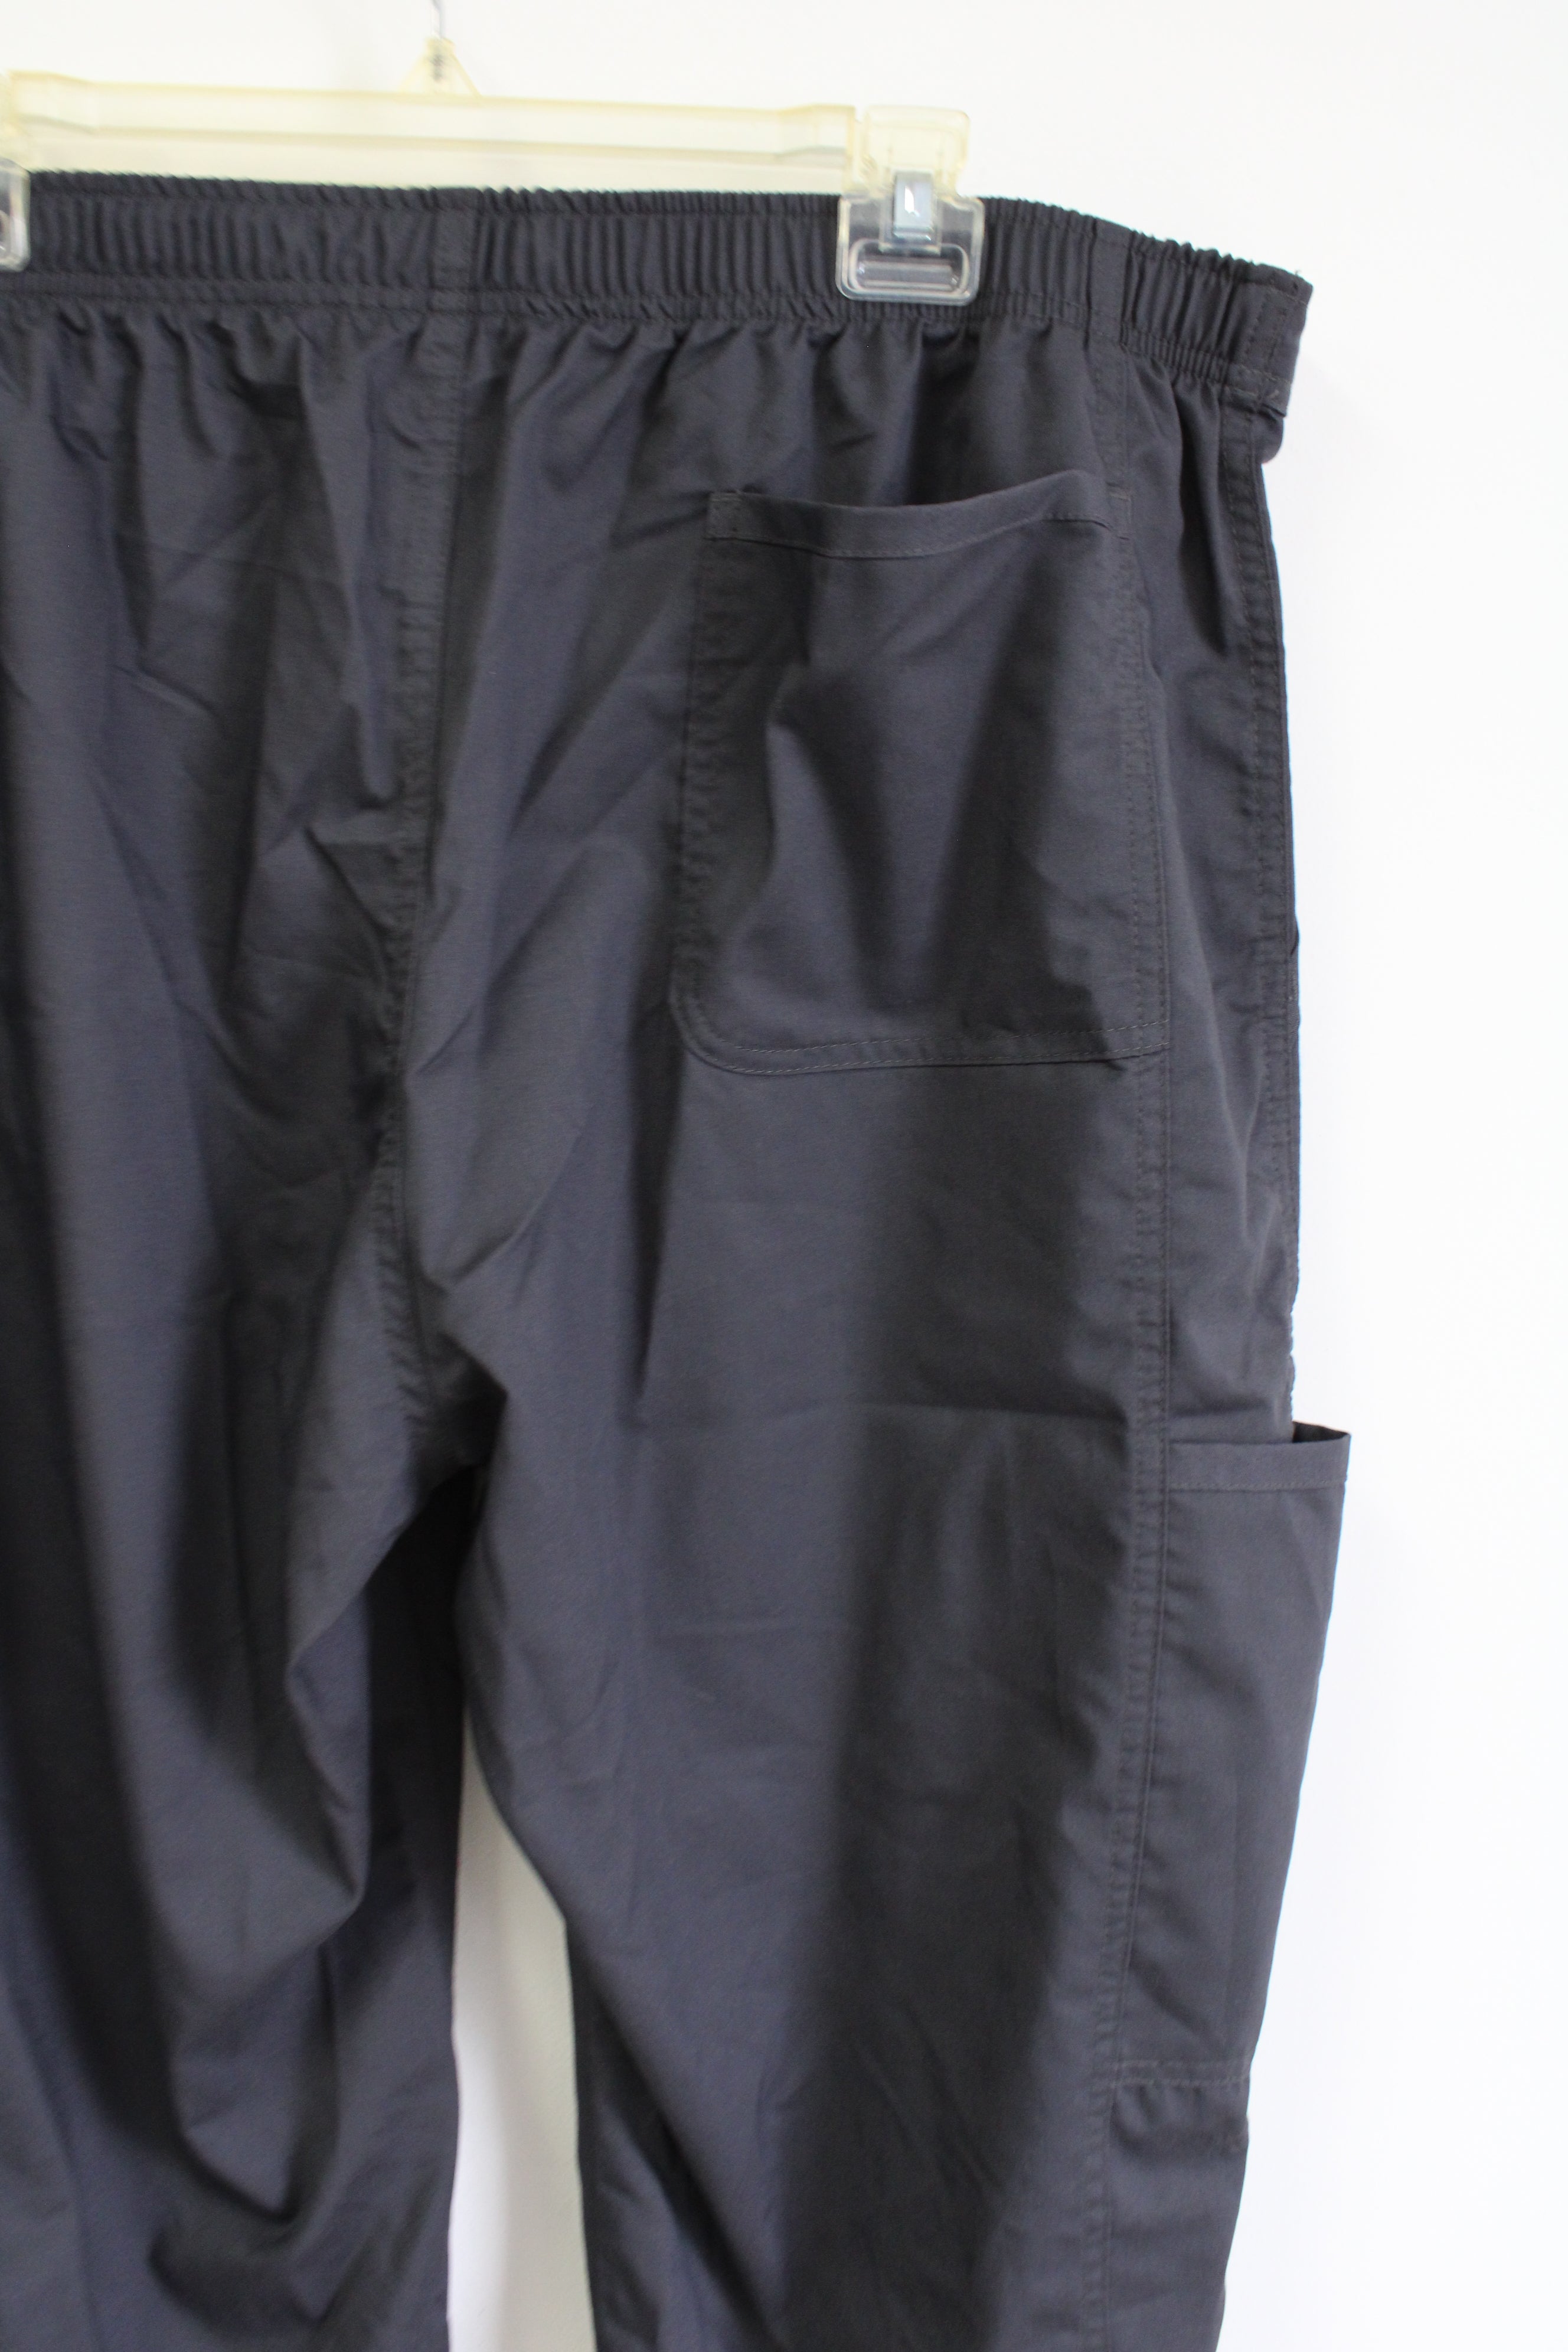 Cherokee Workwear Gray Scrub Pant | XL